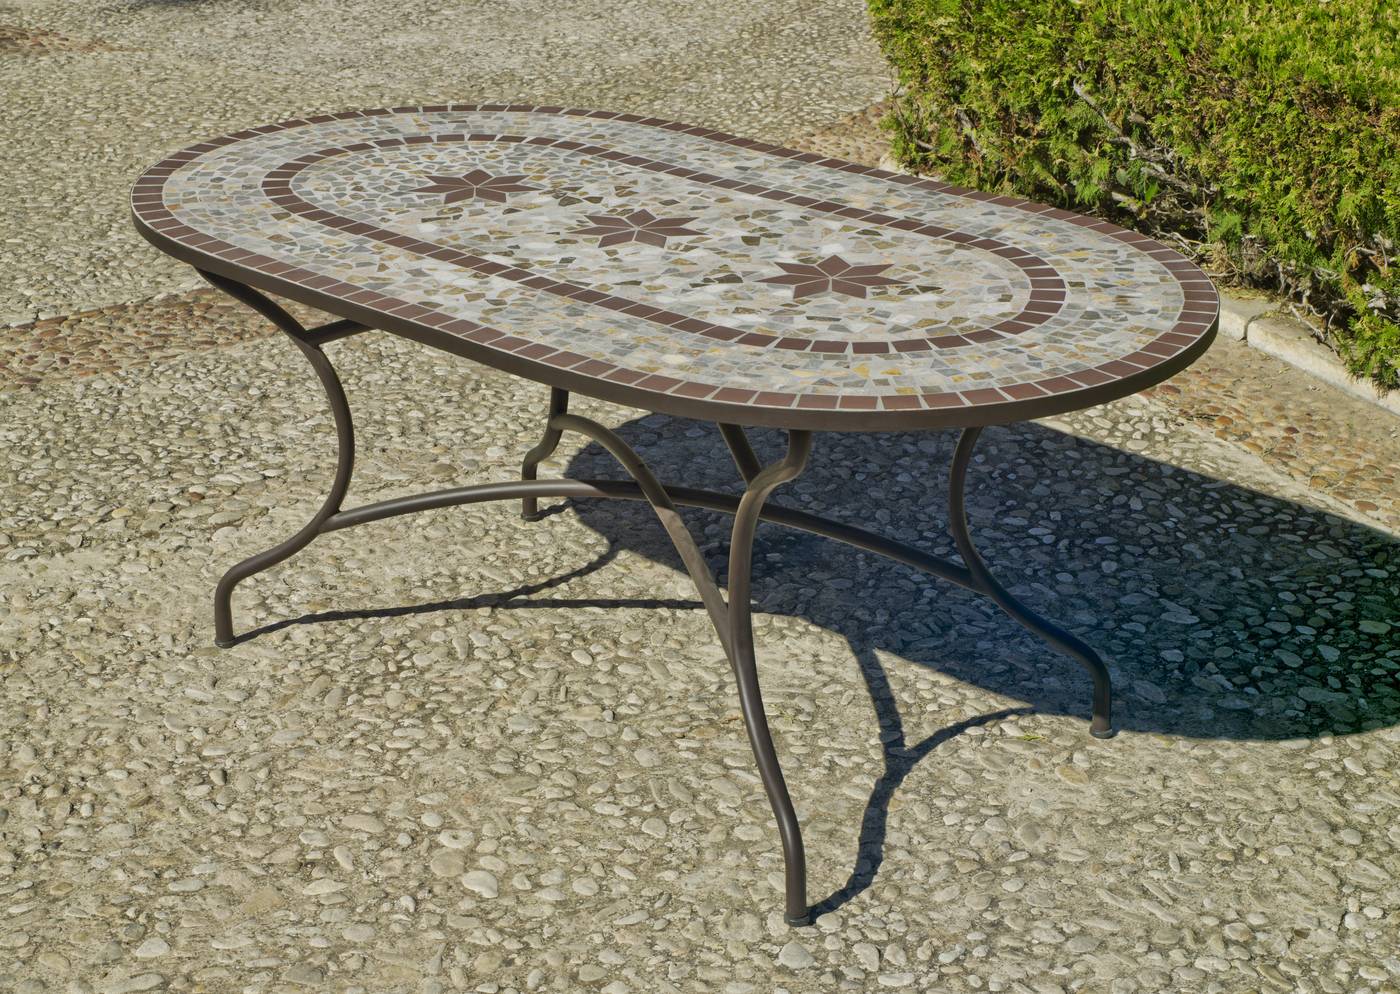 Conjunto Mosaico Luana-Vigo 200-6 - Conjunto para jardín o terraza de forja: 1 mesa con panel mosaico + 6 sillones de forja + 6 cojines. Mesa válida para 8 sillones.